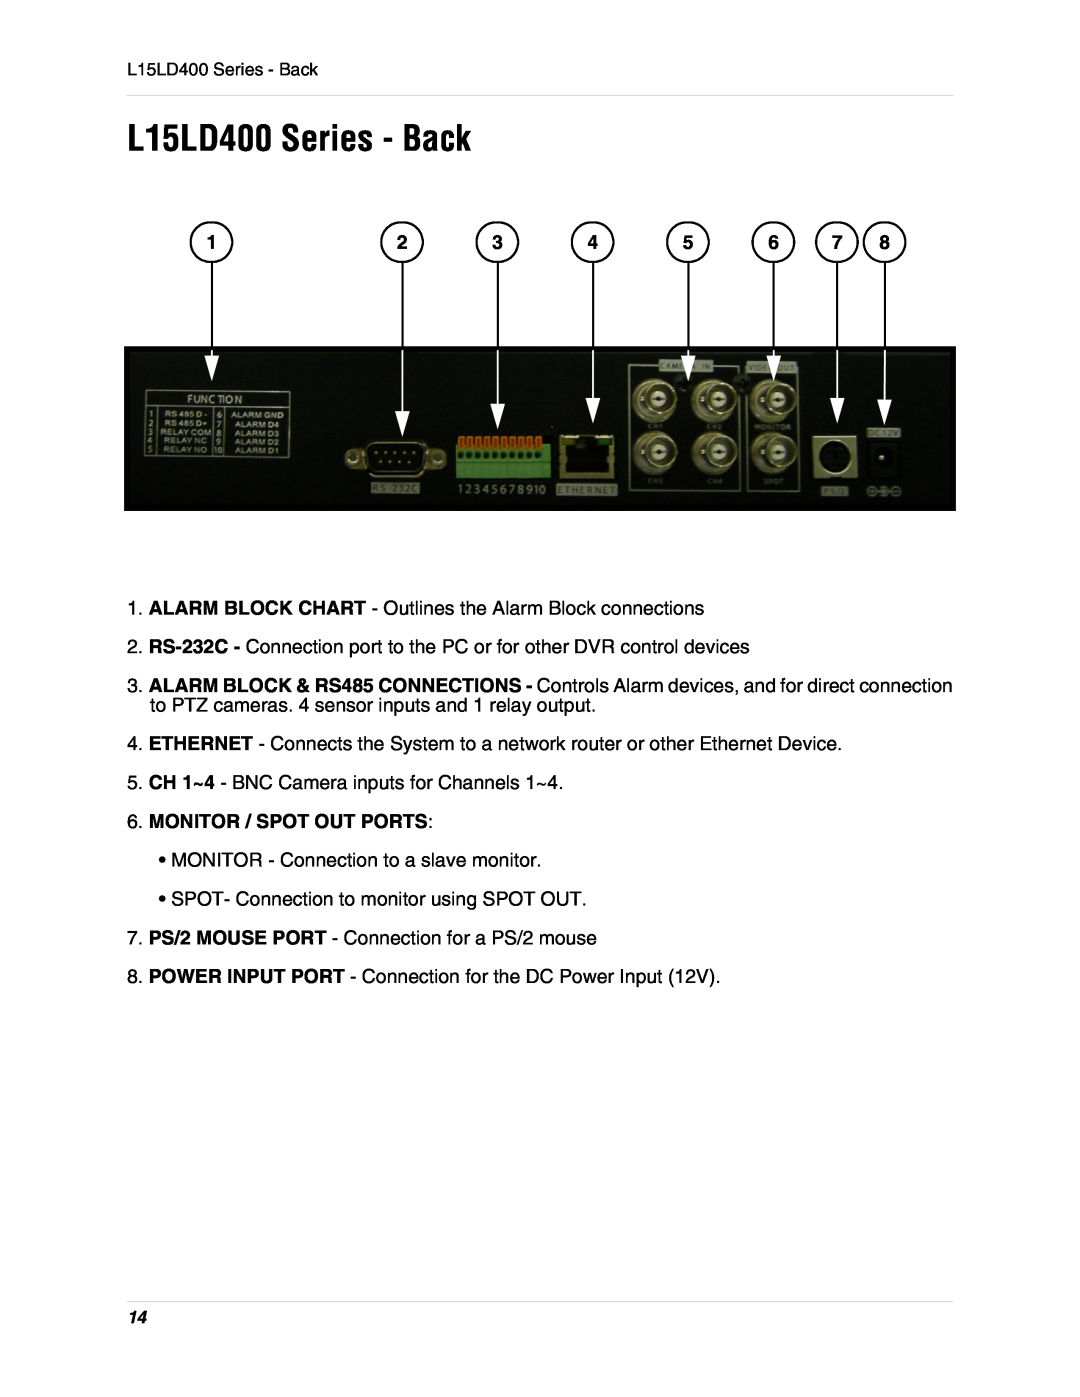 LOREX Technology L15D400 instruction manual L15LD400 Series - Back, Monitor / Spot Out Ports 